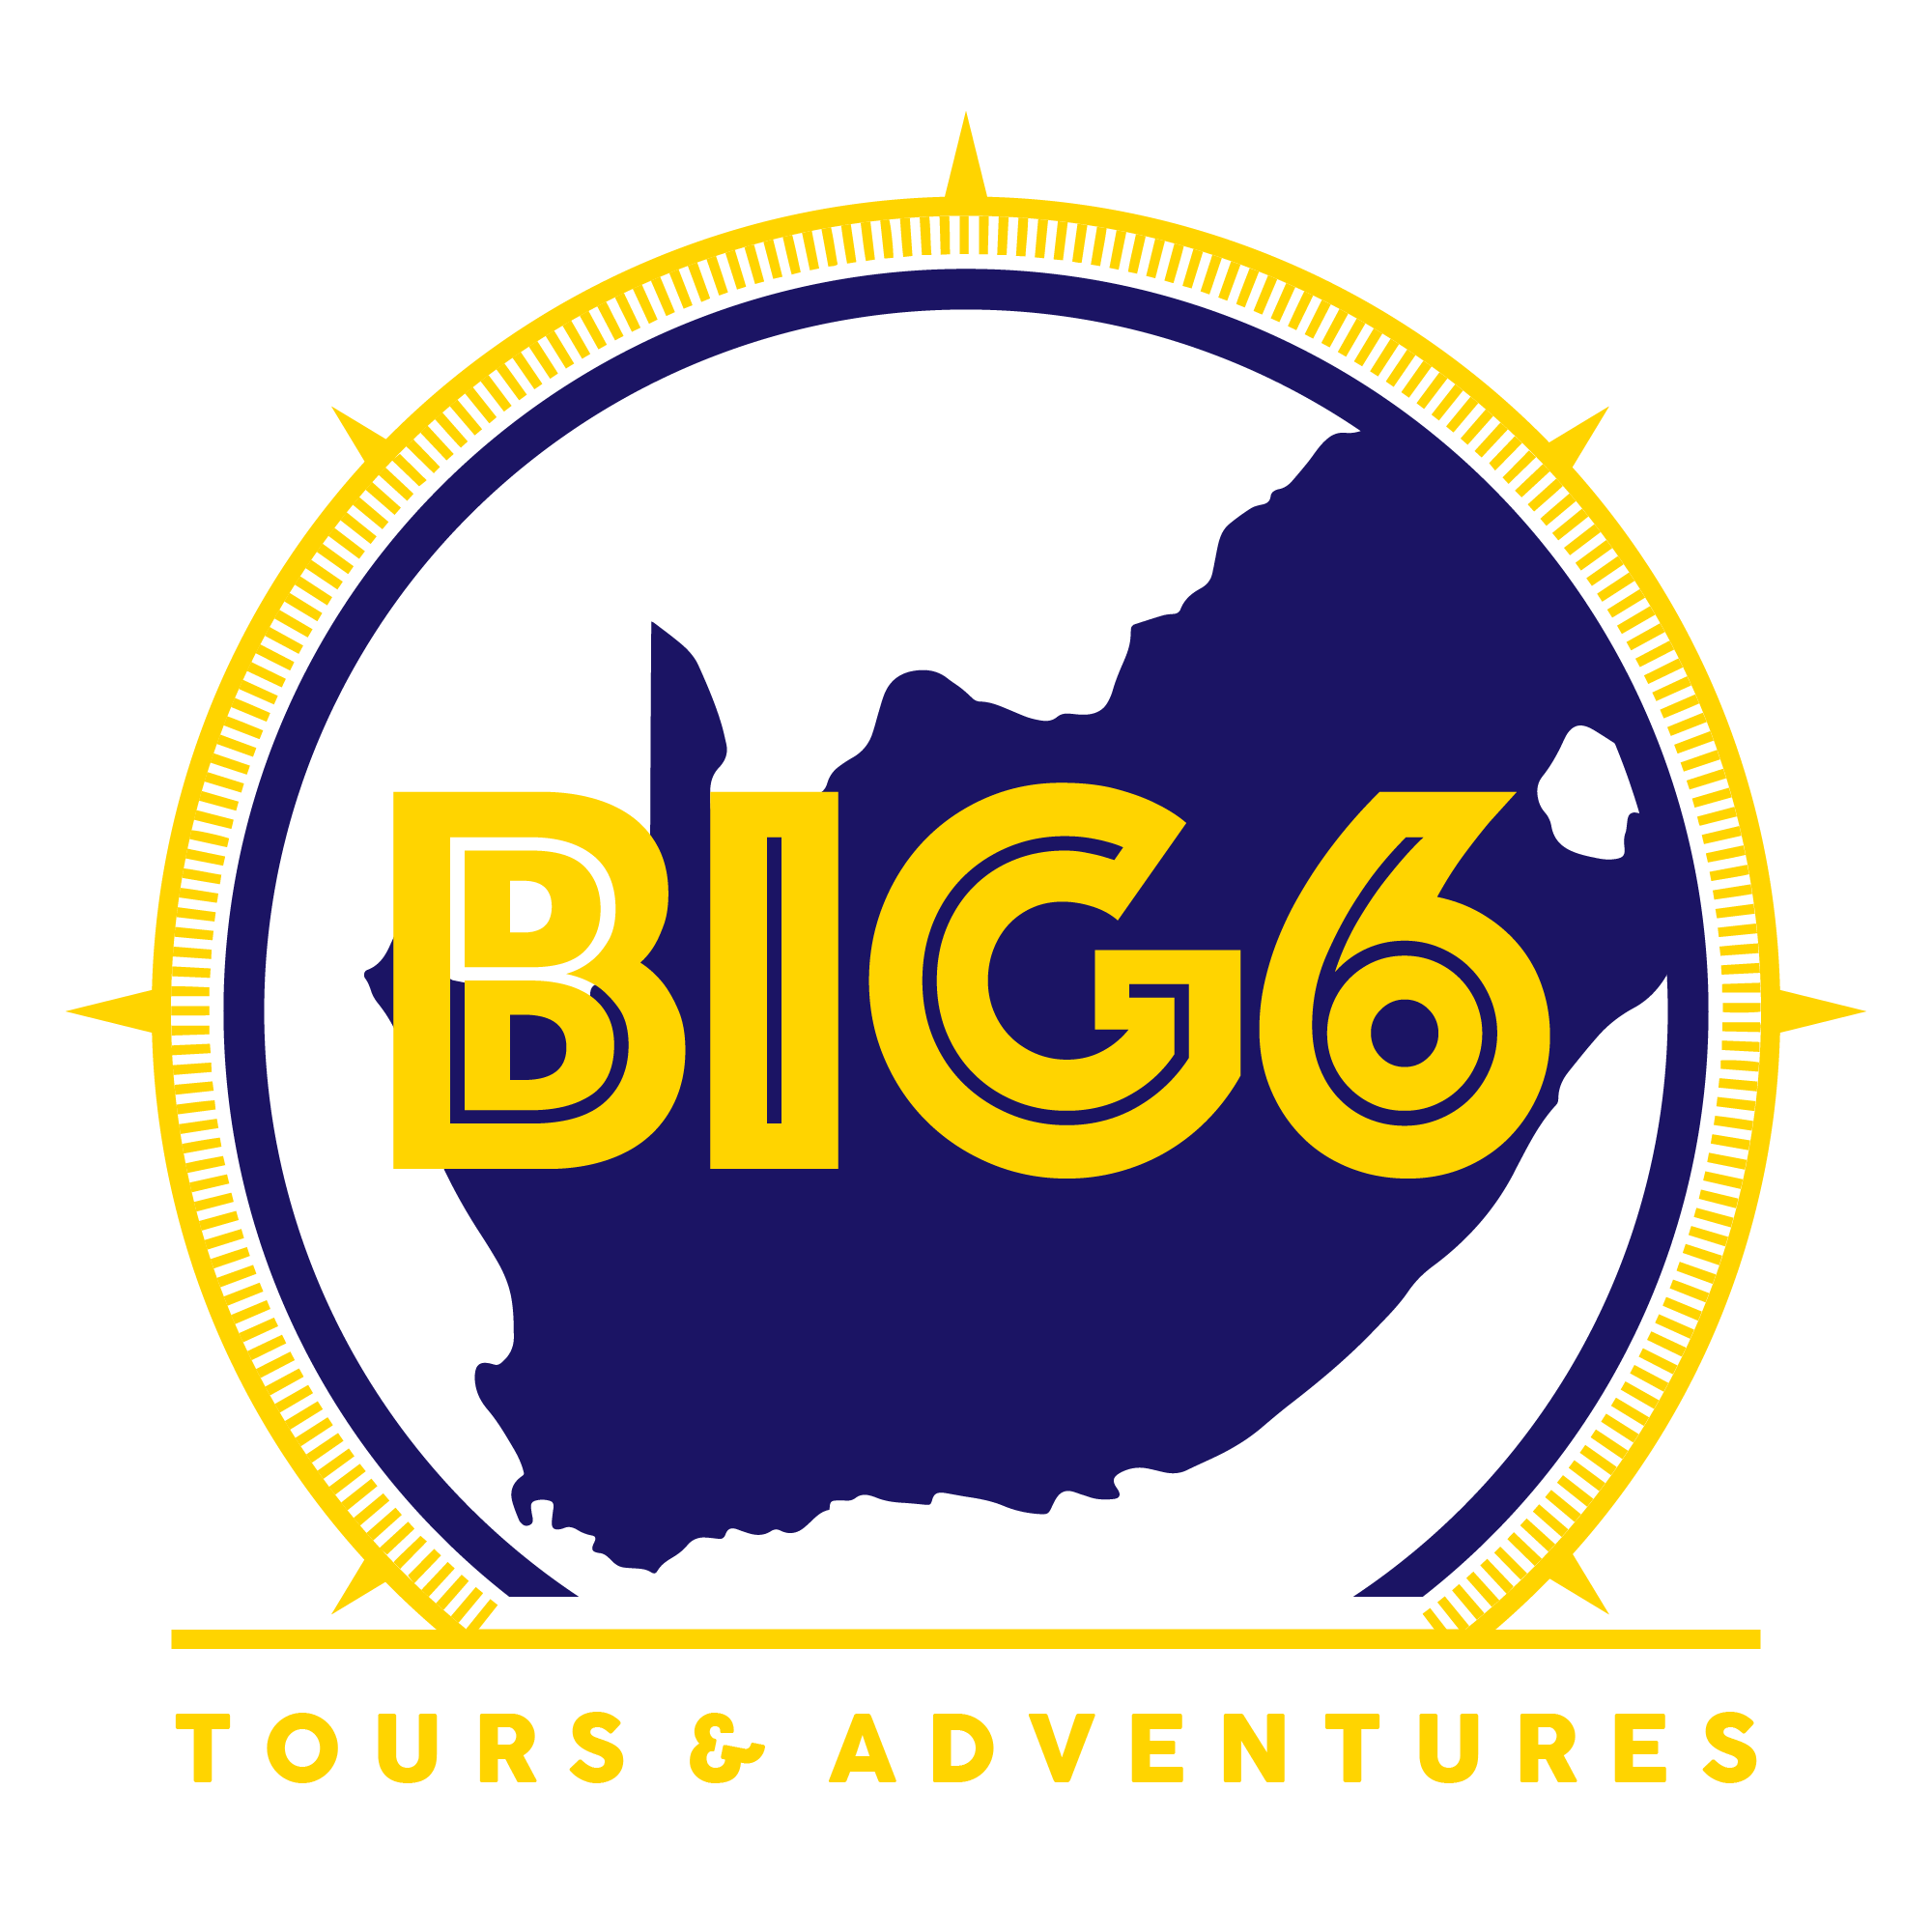 Big6 Tours & Adventures